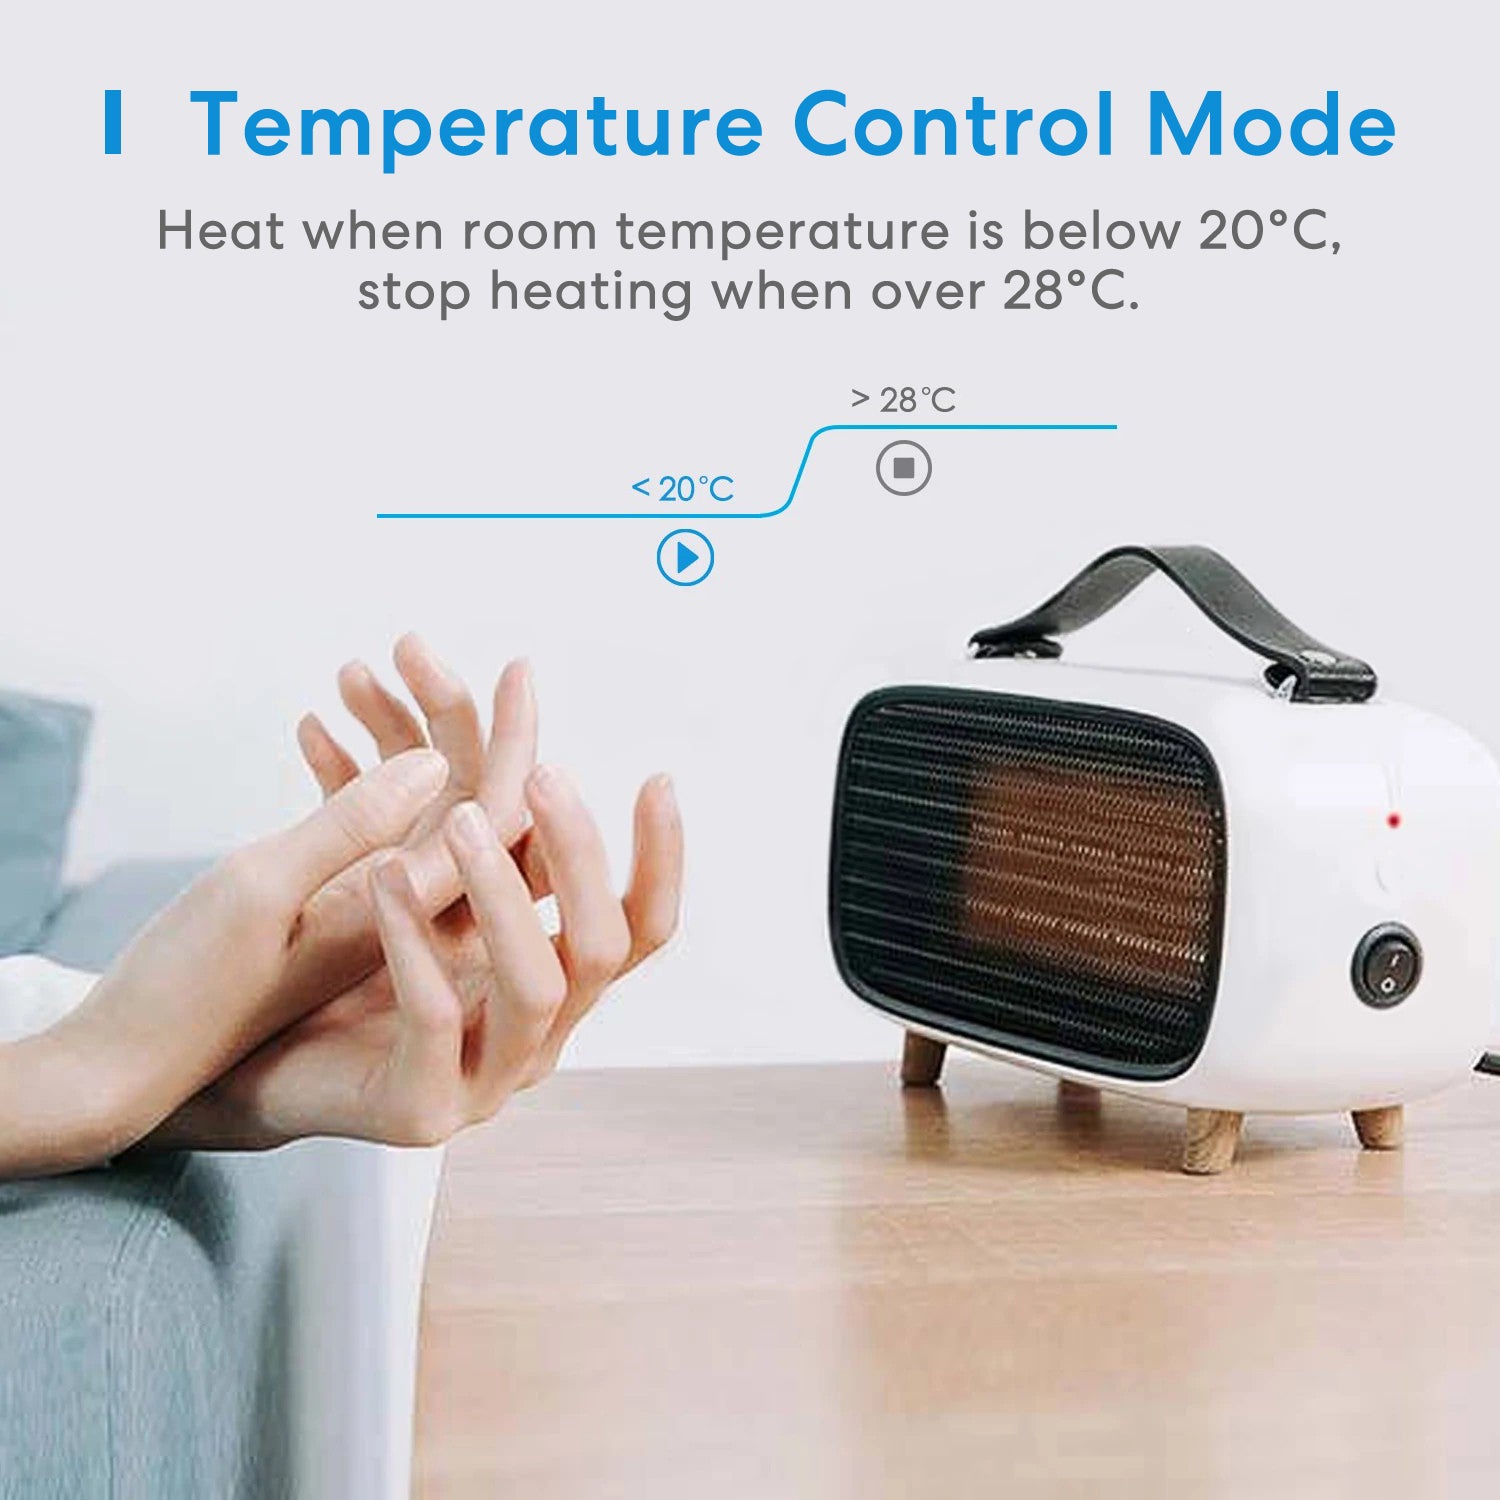 Meross Socket Thermostat, Digital Temperature Controller with Sensor, MTS910 Classic